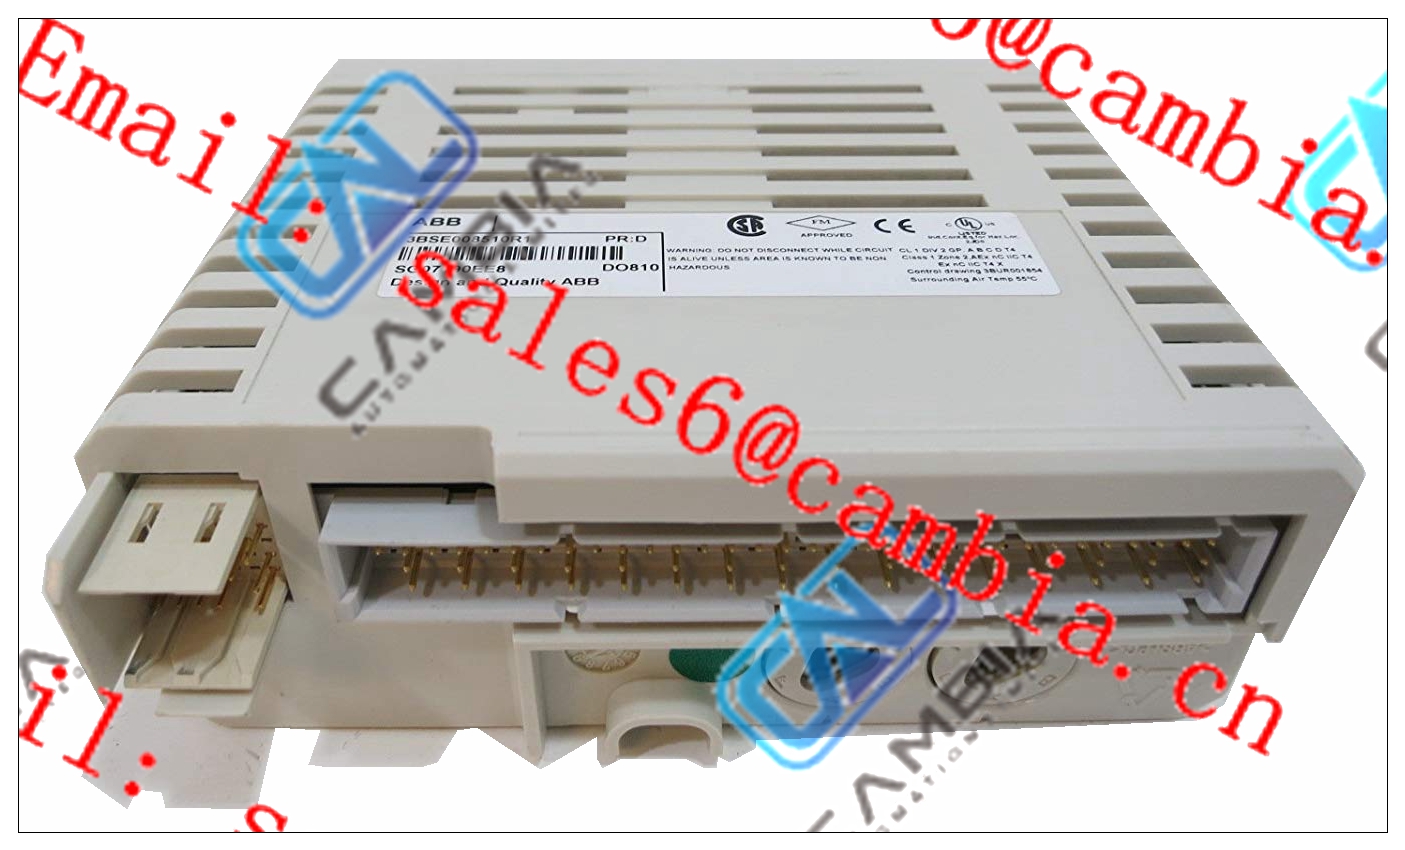 3HAC033234-001	Output Power Distribution Module